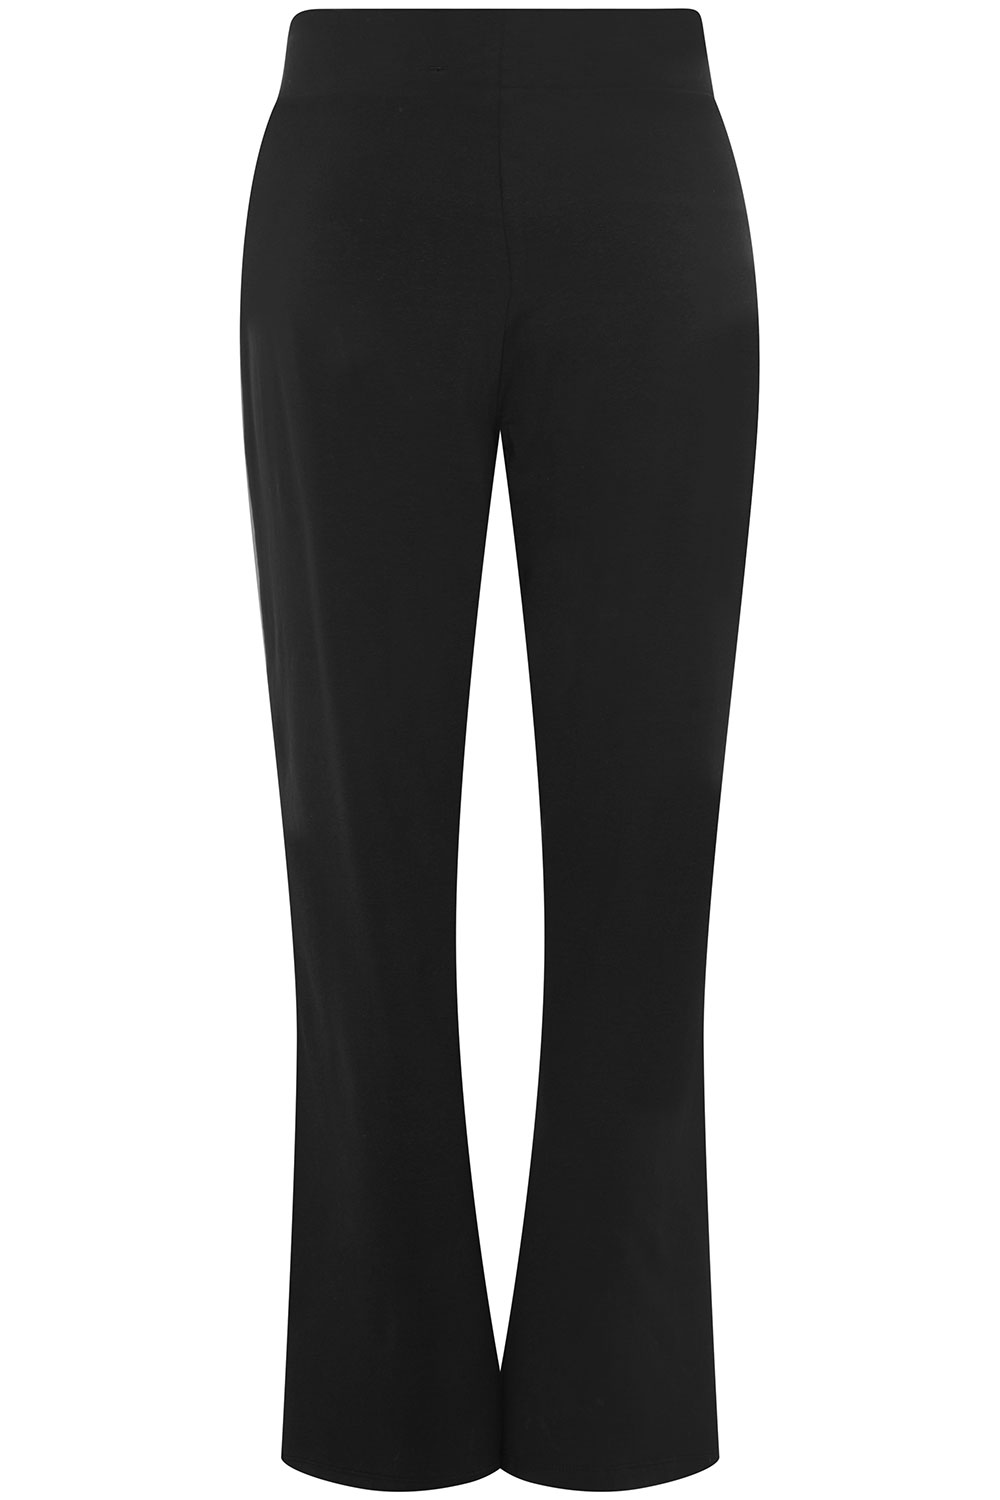 Stylish Black Cotton Blend Striped Track Pants For Women, Yoga